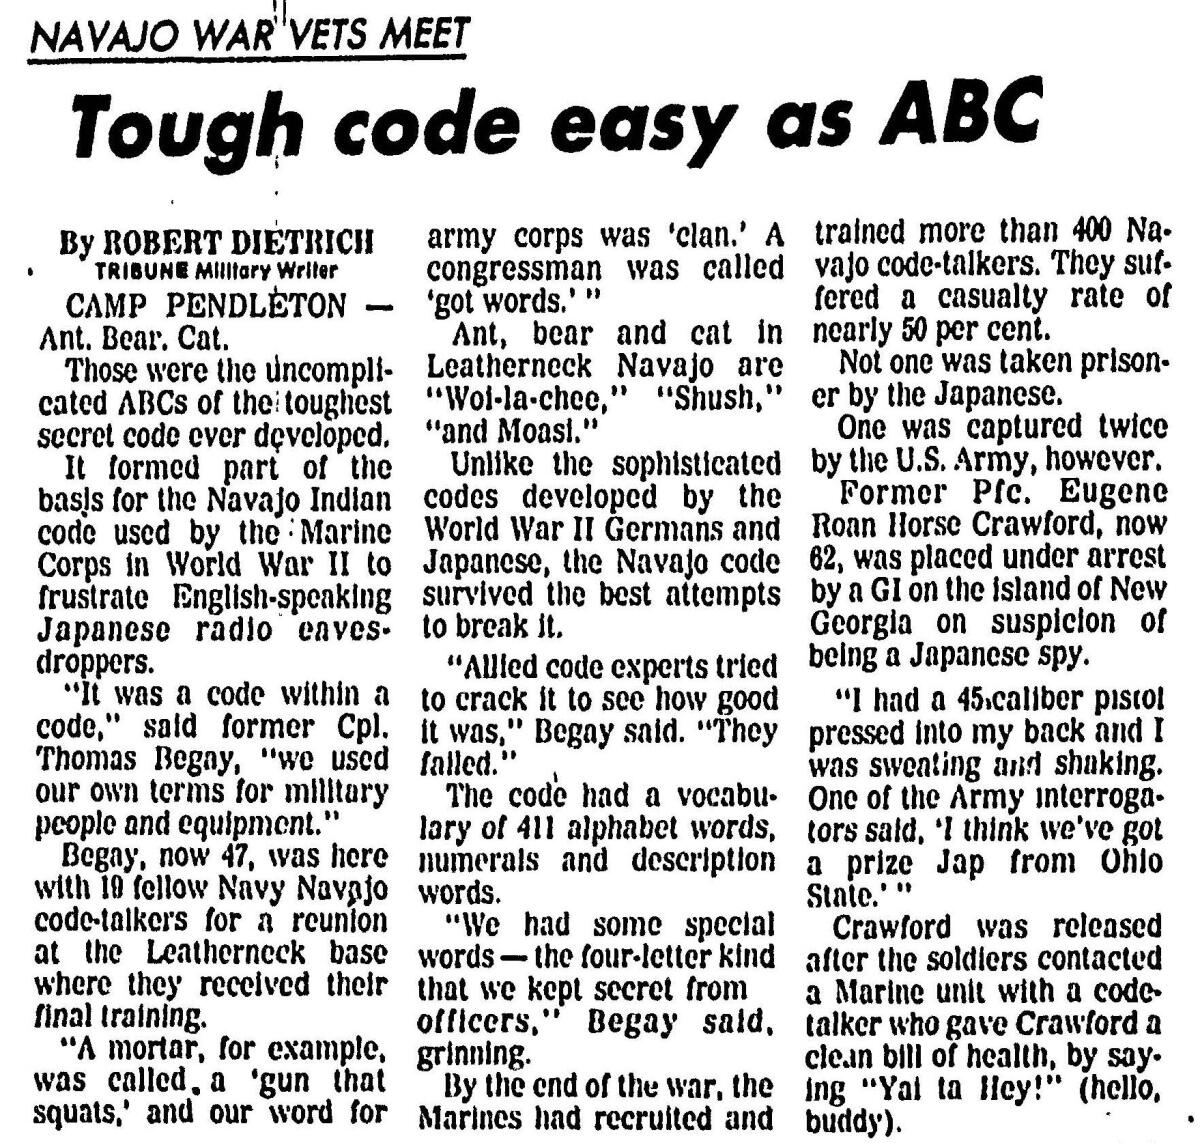  Evening Tribune article published Jan. 1, 1975.